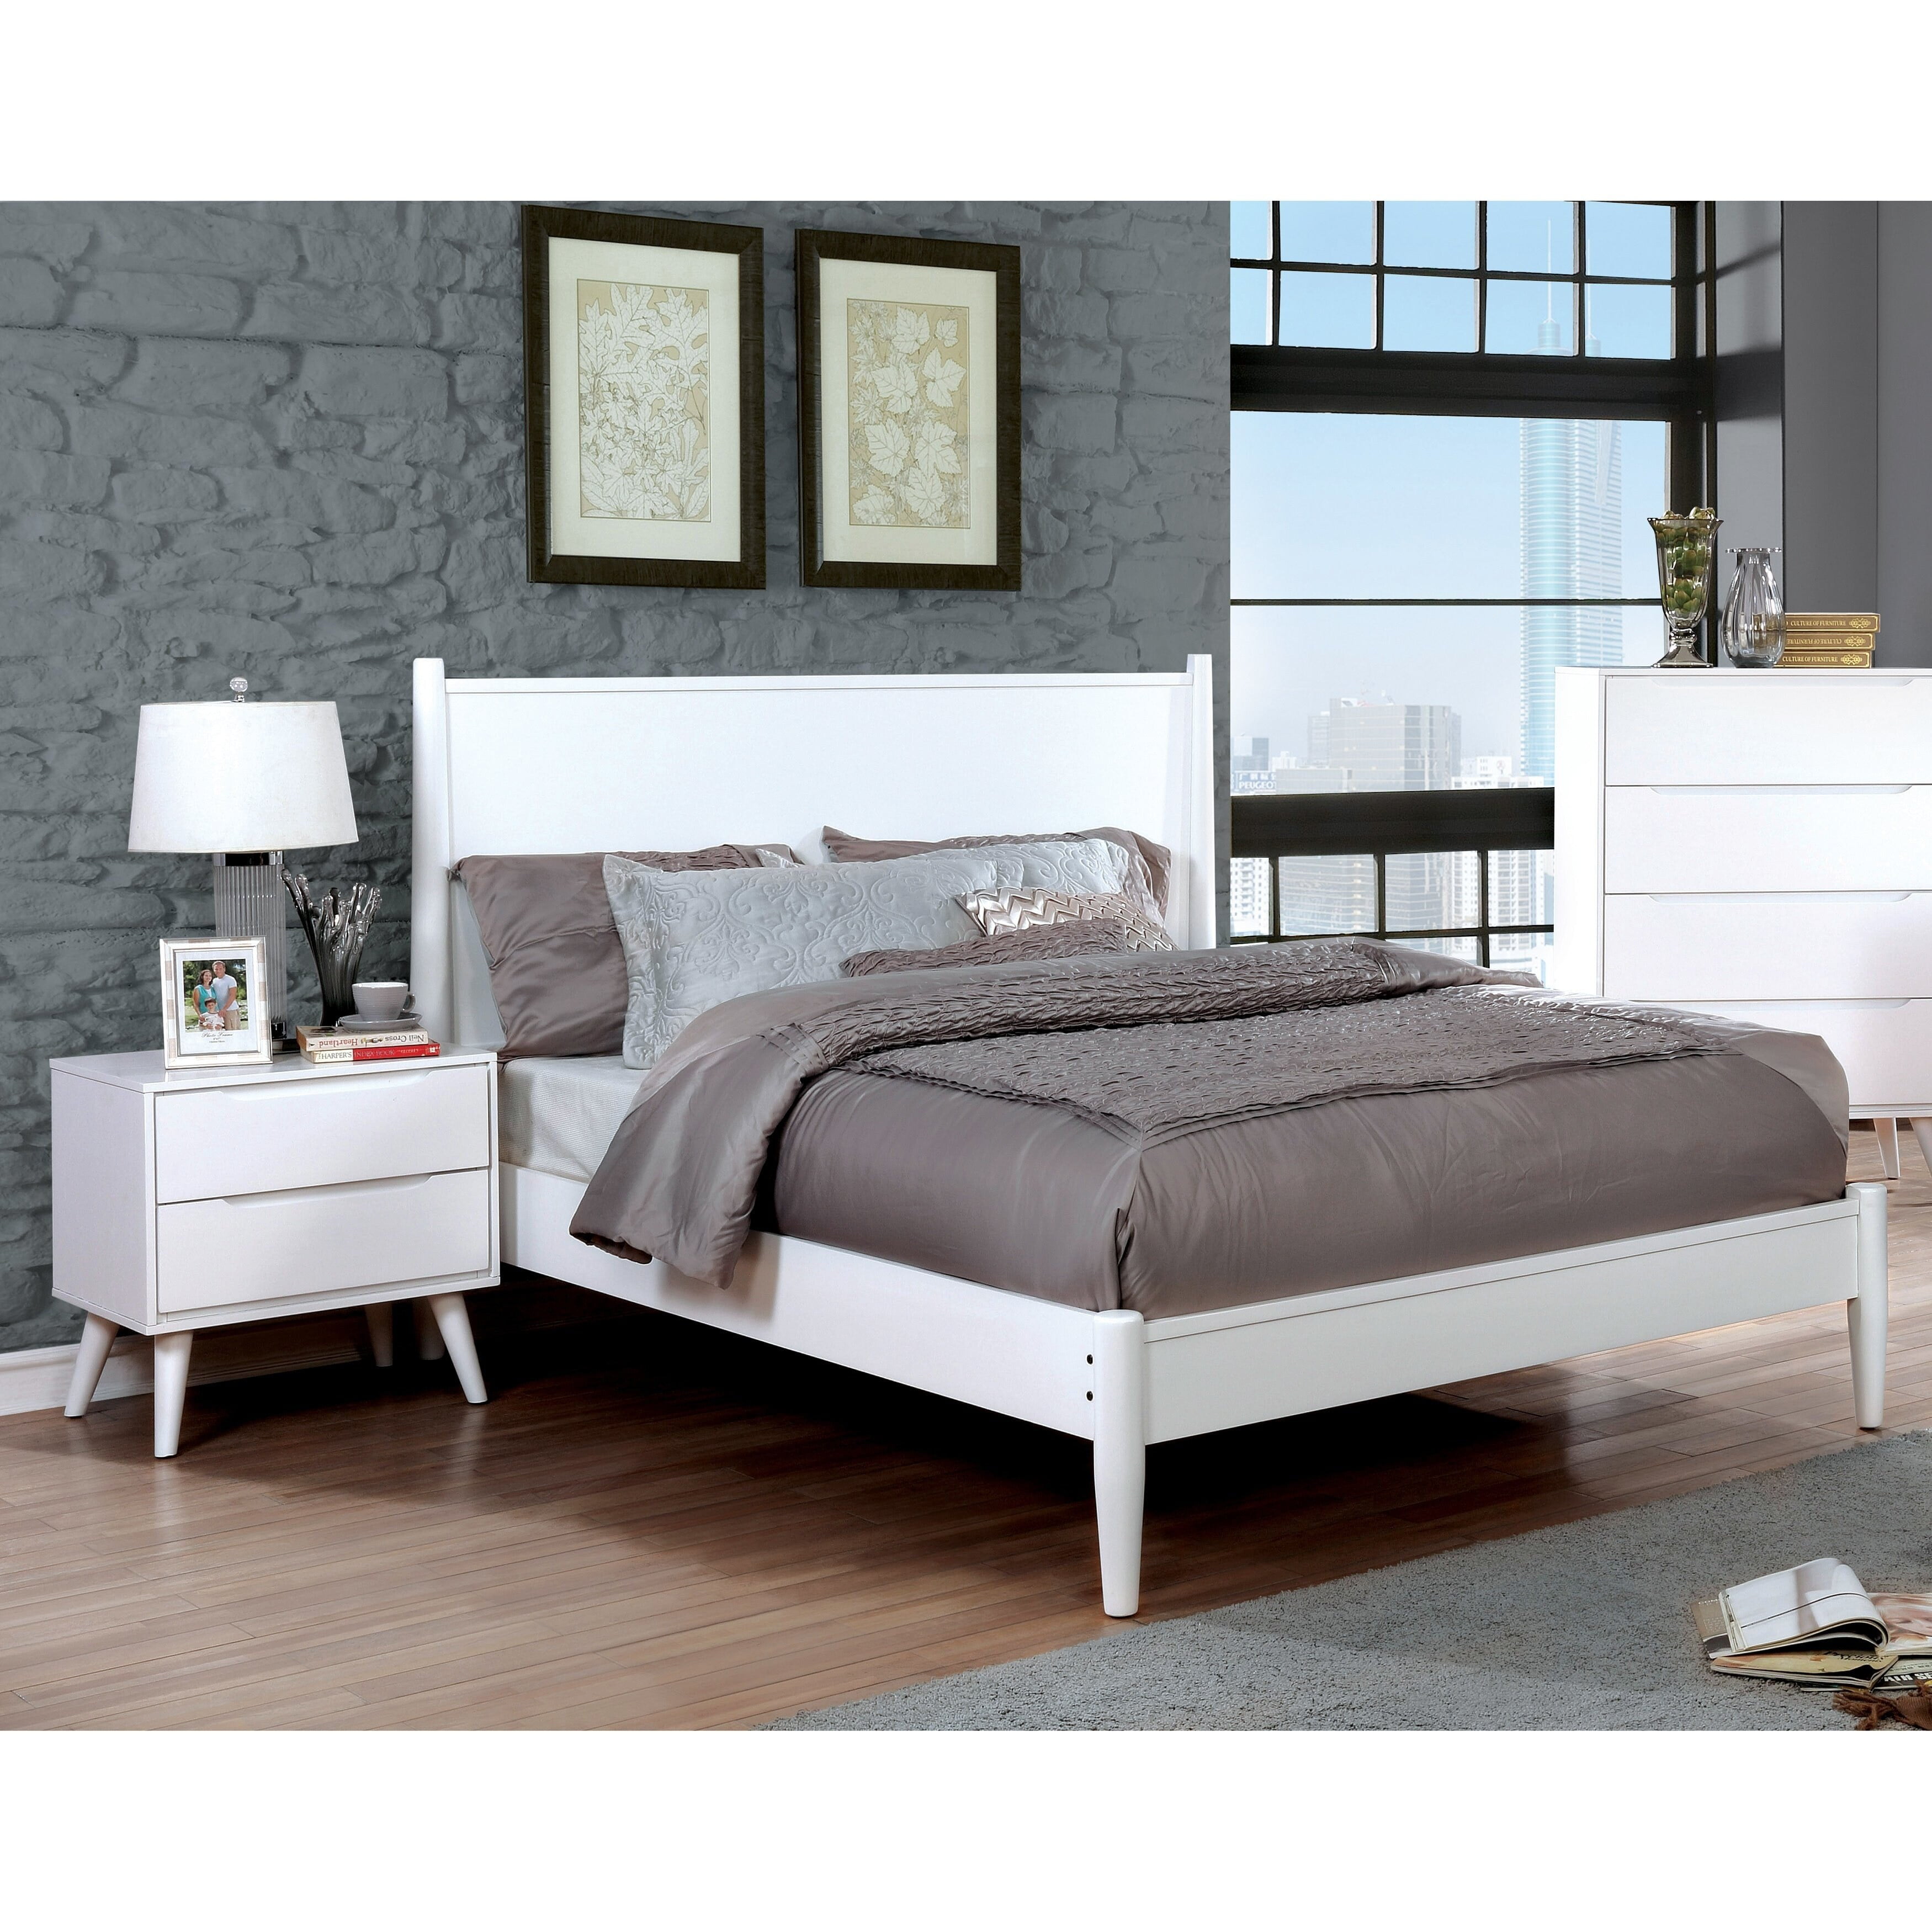 Furniture Of America Fopp Mid Century, Mid Century Modern Bedroom Dresser Set